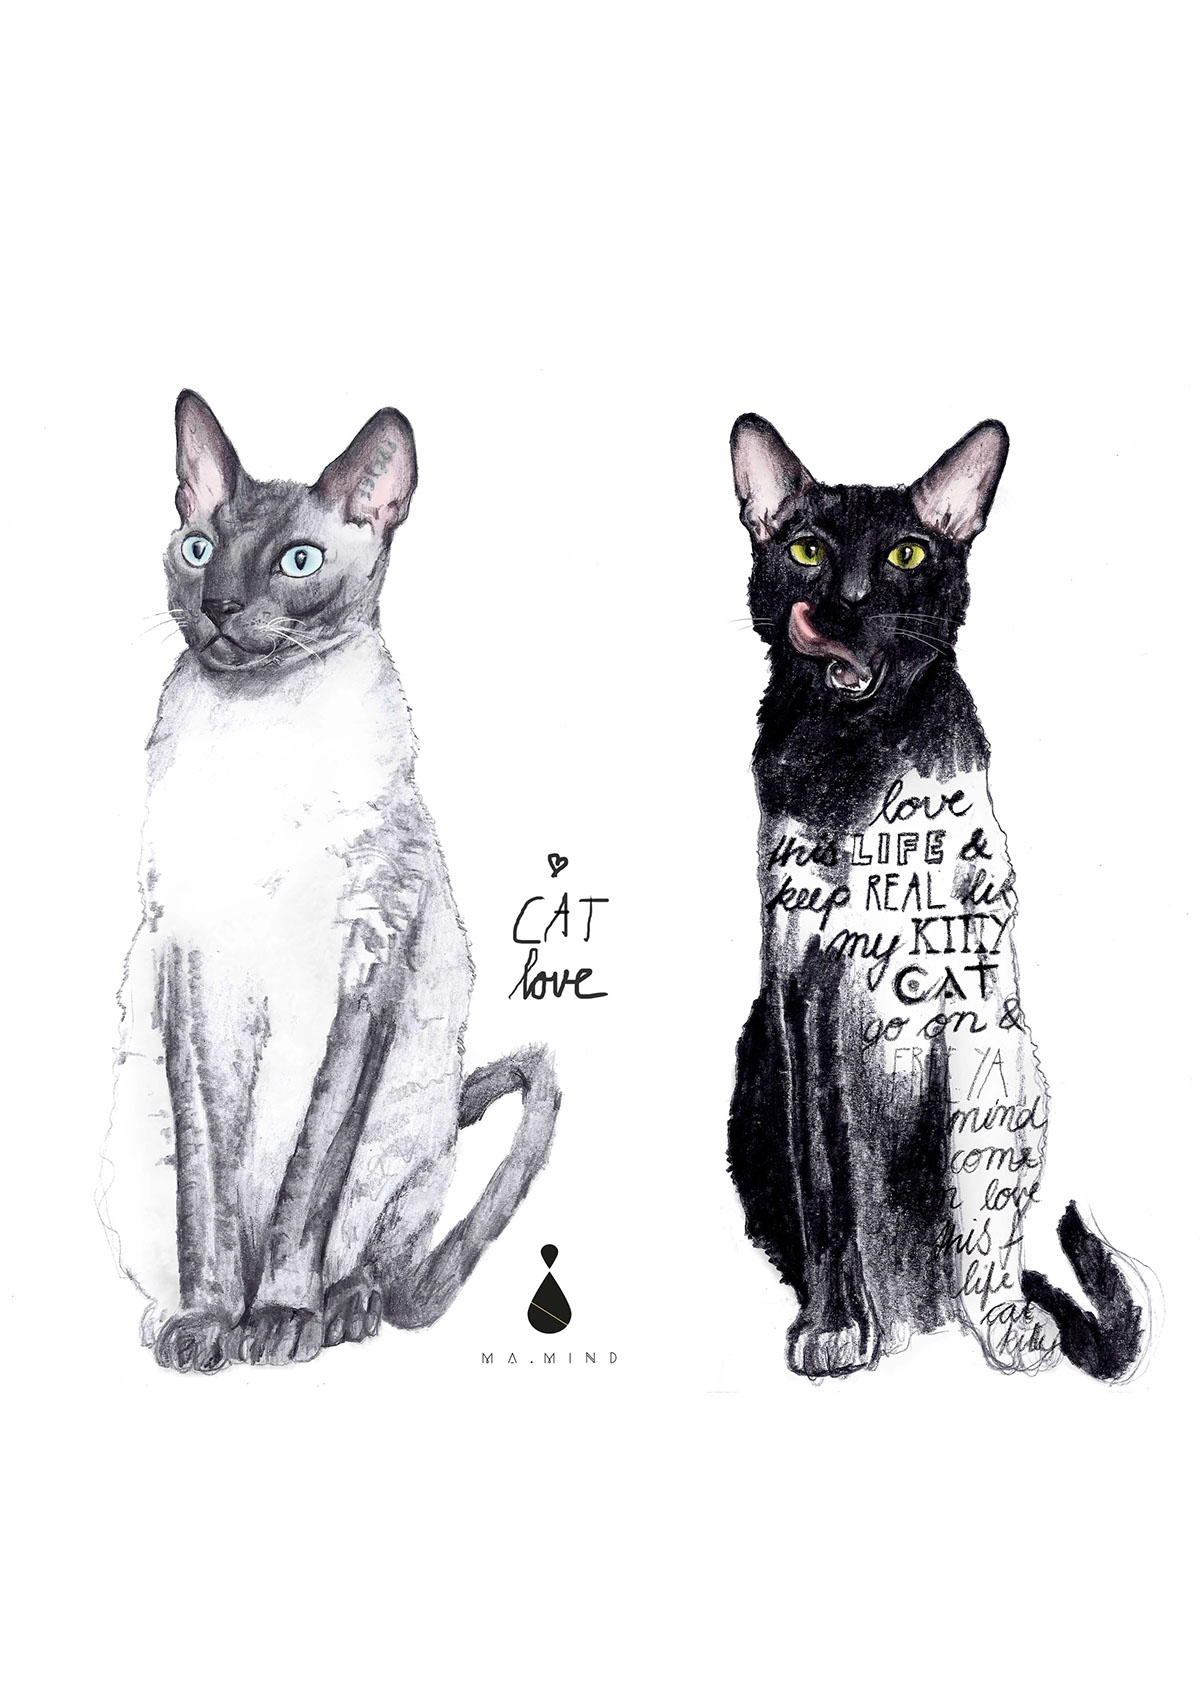 cornisch rex art t-shirt design Cat kitty Love Nature animal lettering pencil digital colour graphic creative